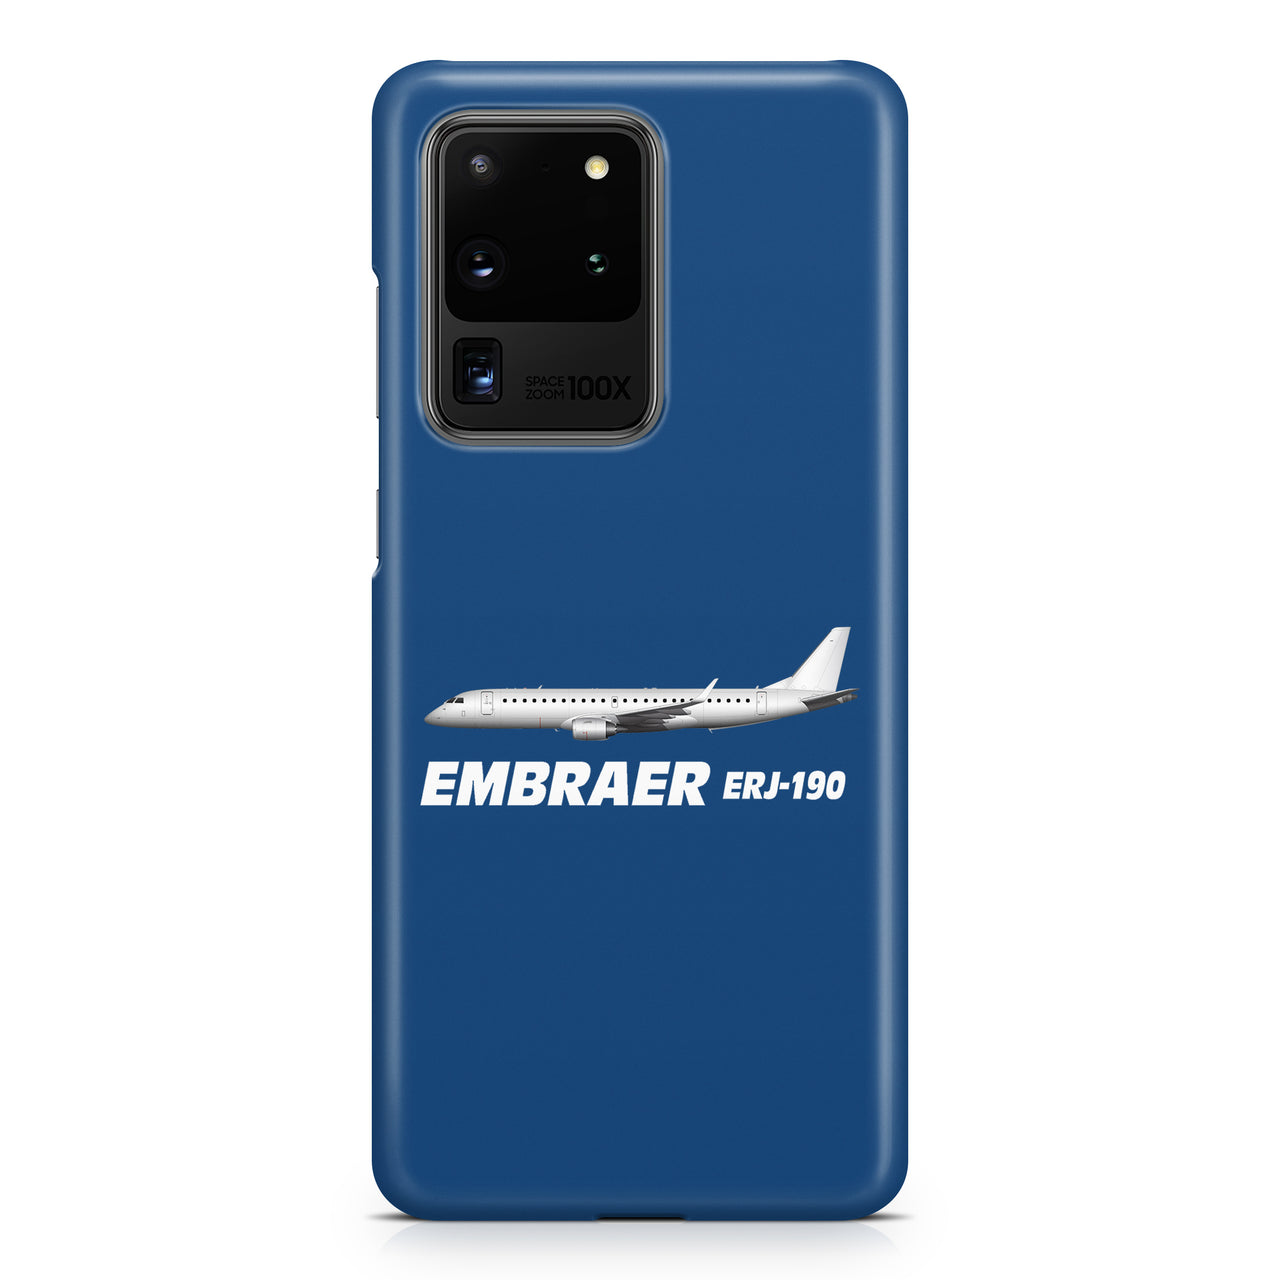 The Embraer ERJ-190 Samsung A Cases